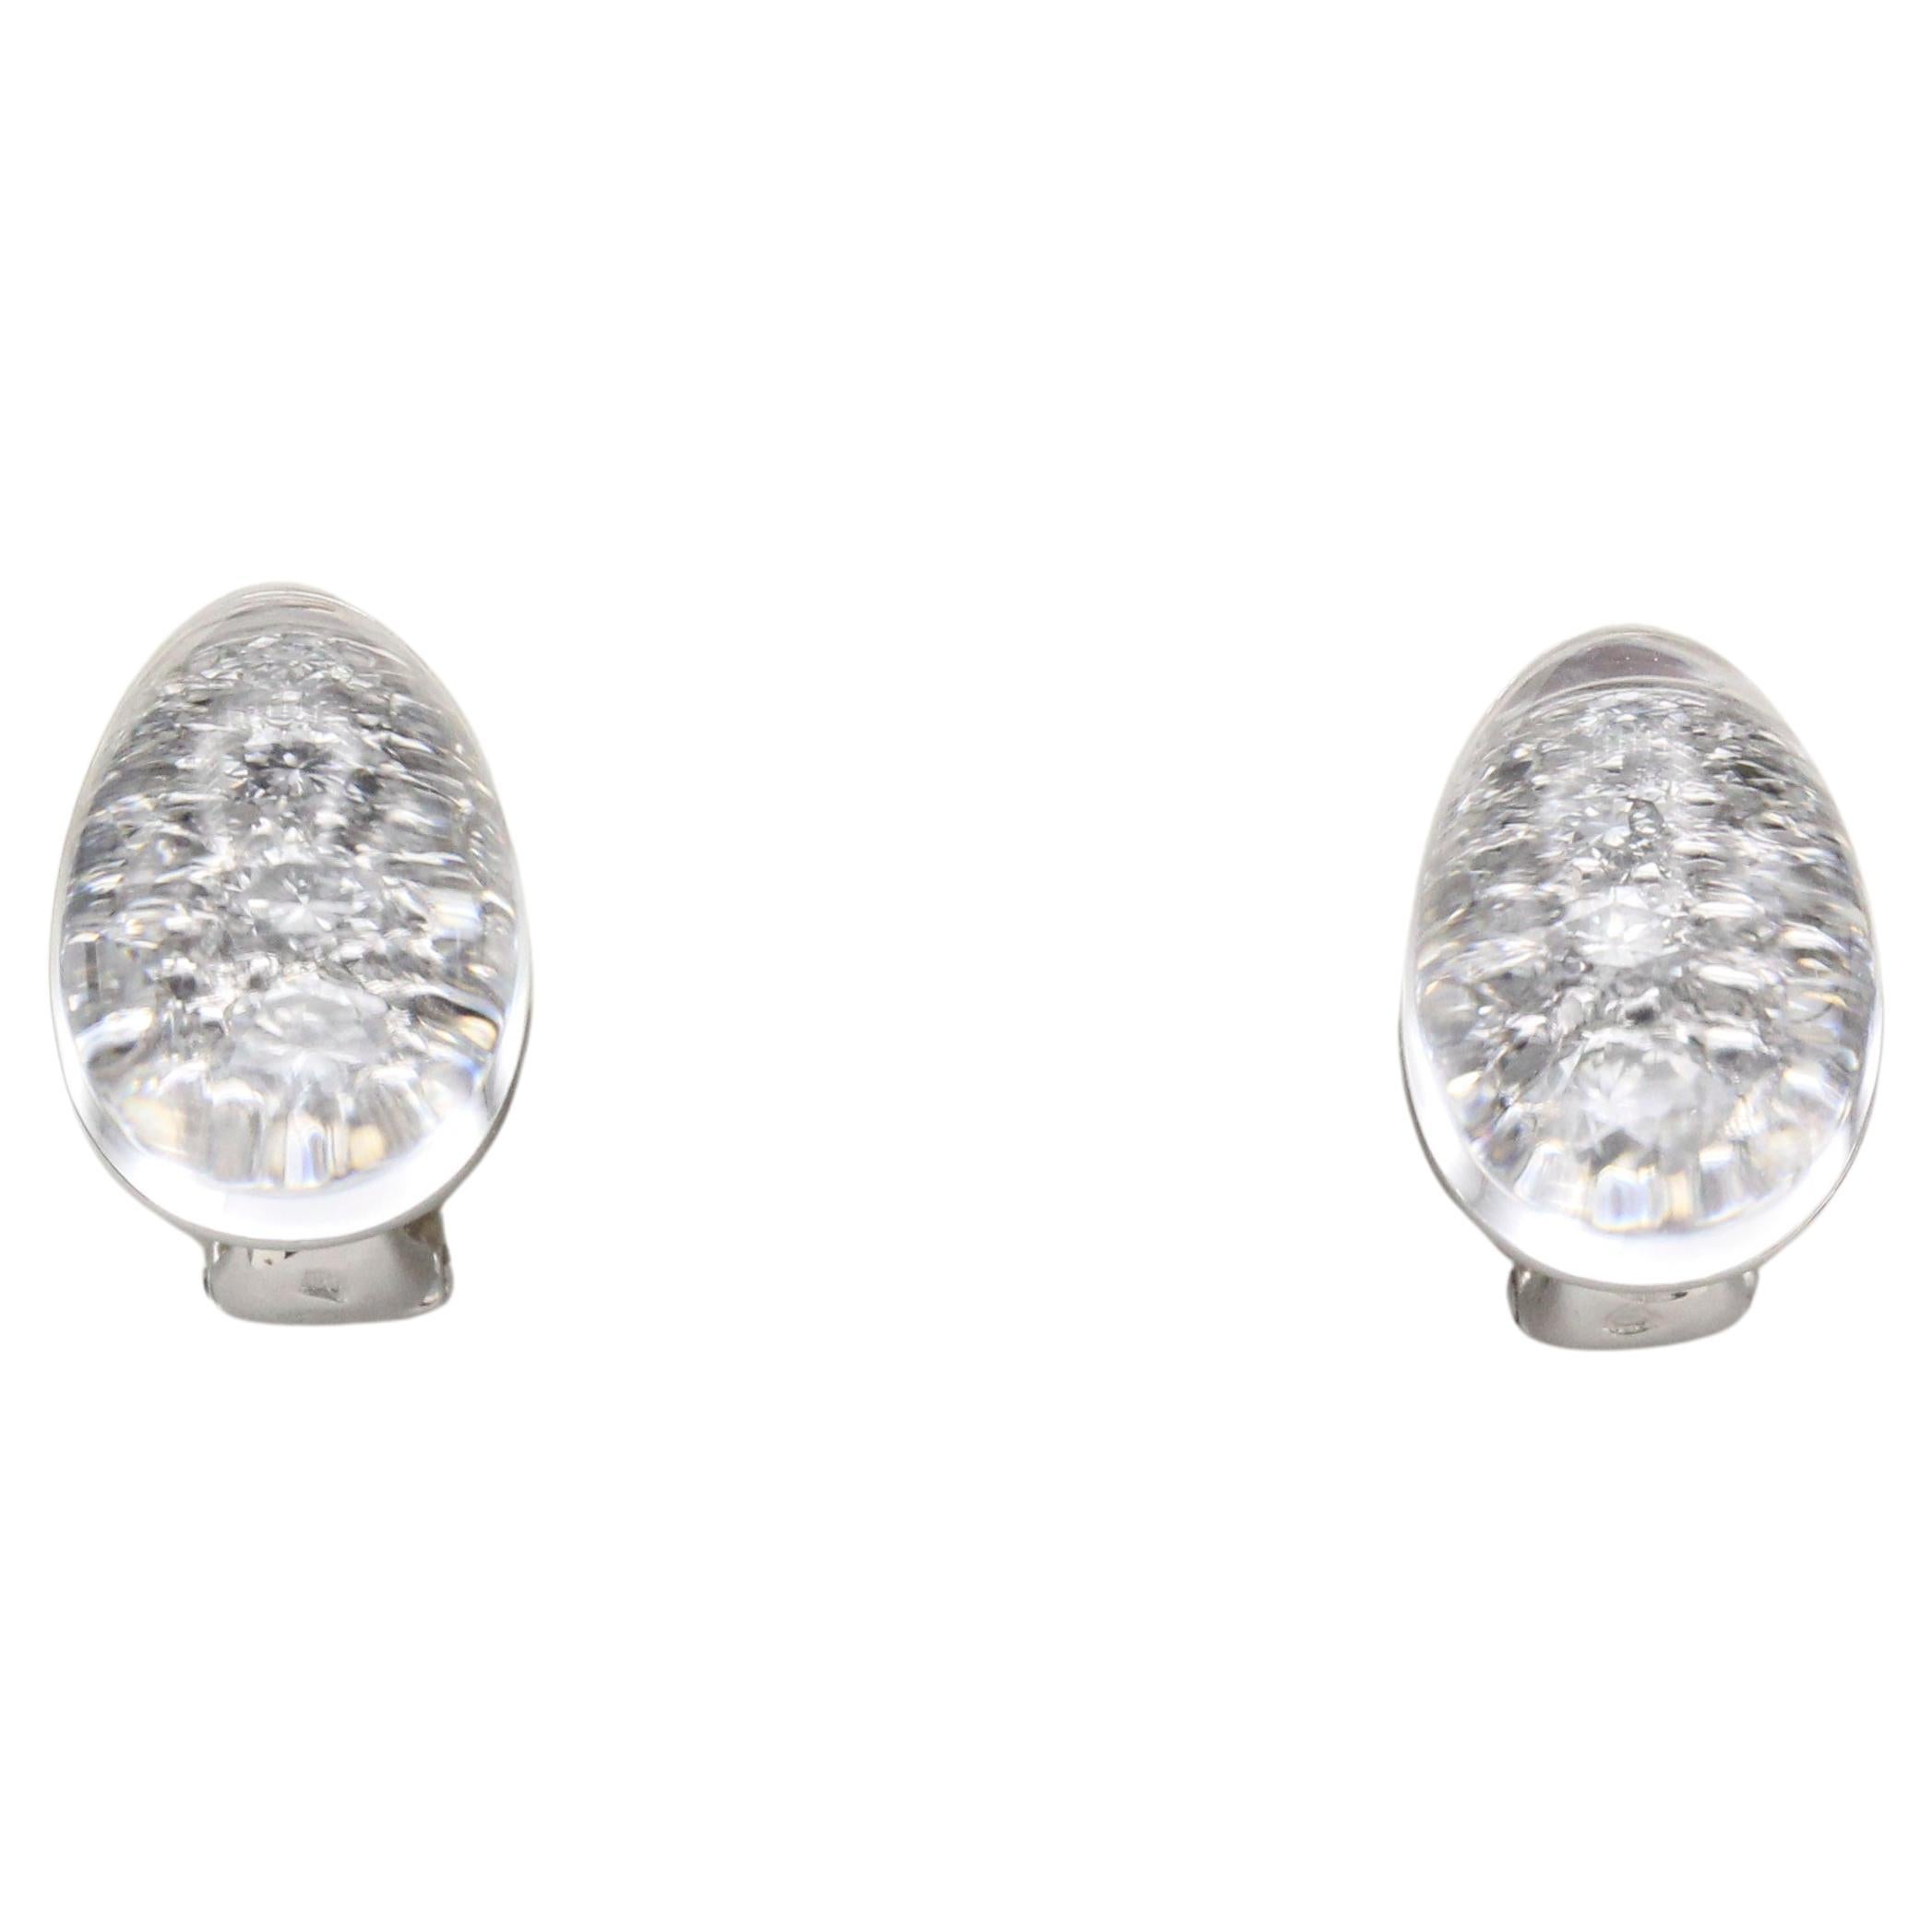 Cartier Myst Rock Crystal Diamond 18 Karat White Gold Dome Earrings